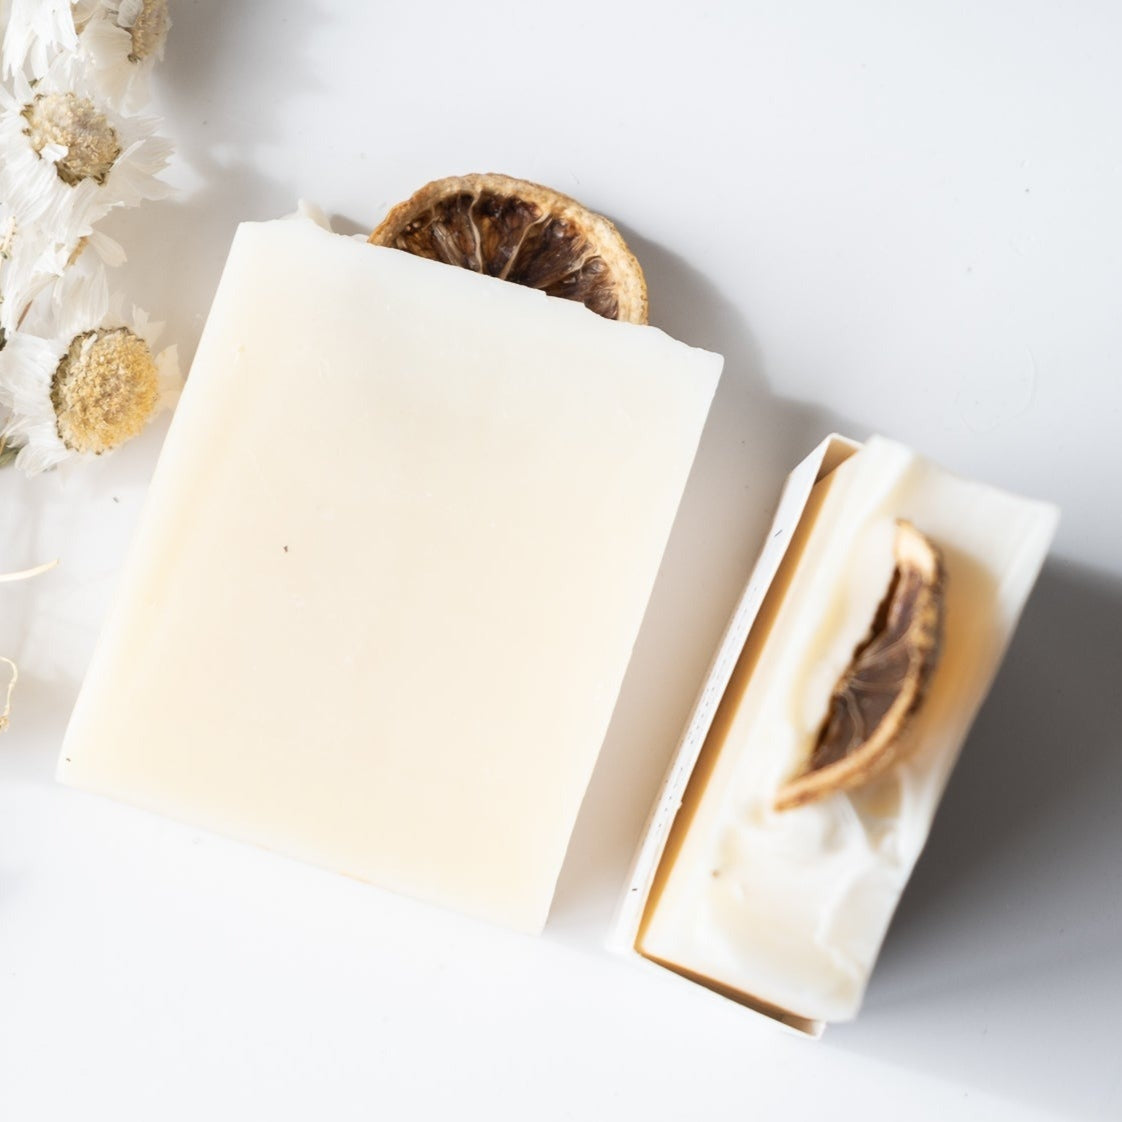 Natural Amor Handmade Soap Bar - Coconut Milk